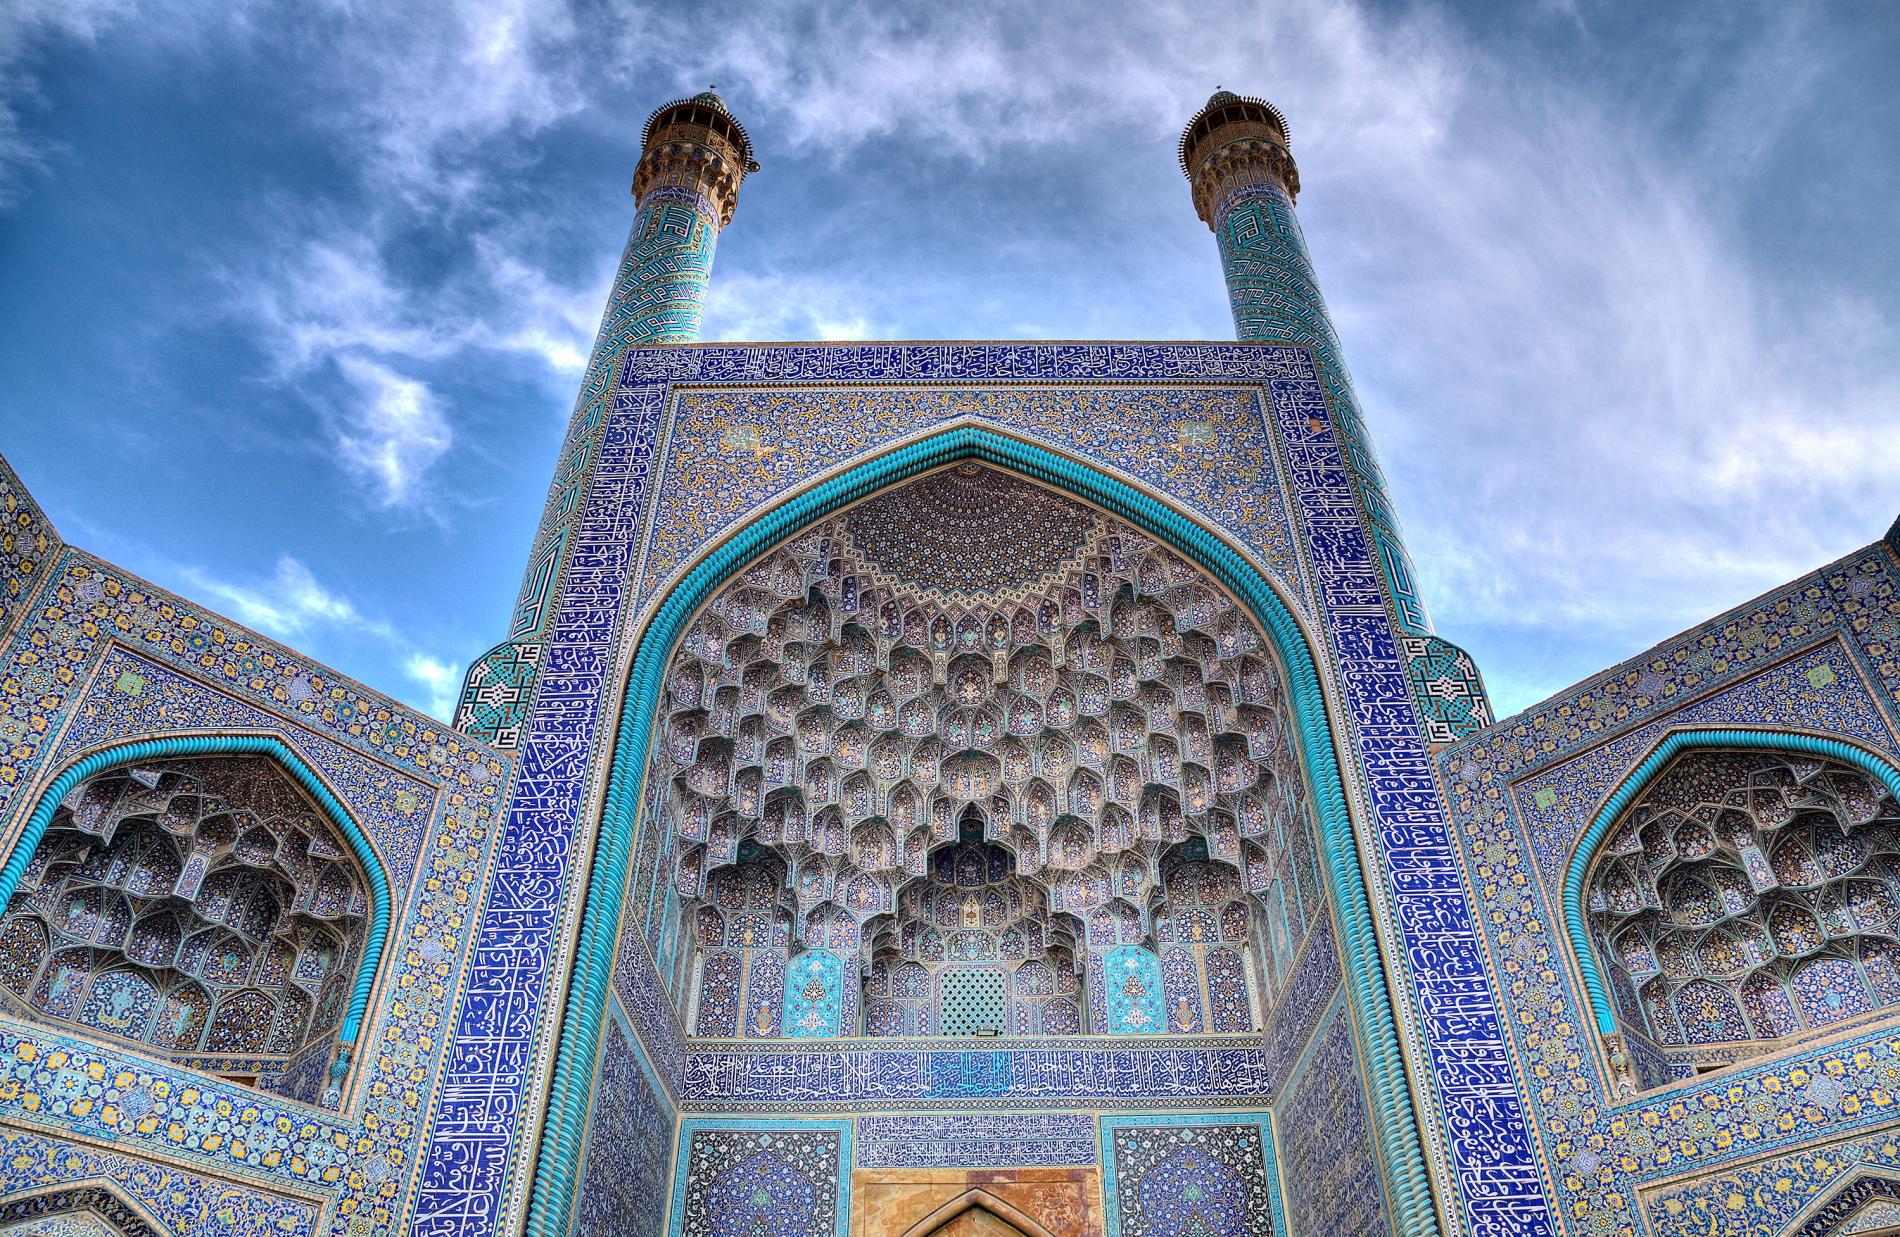 mosque architecture